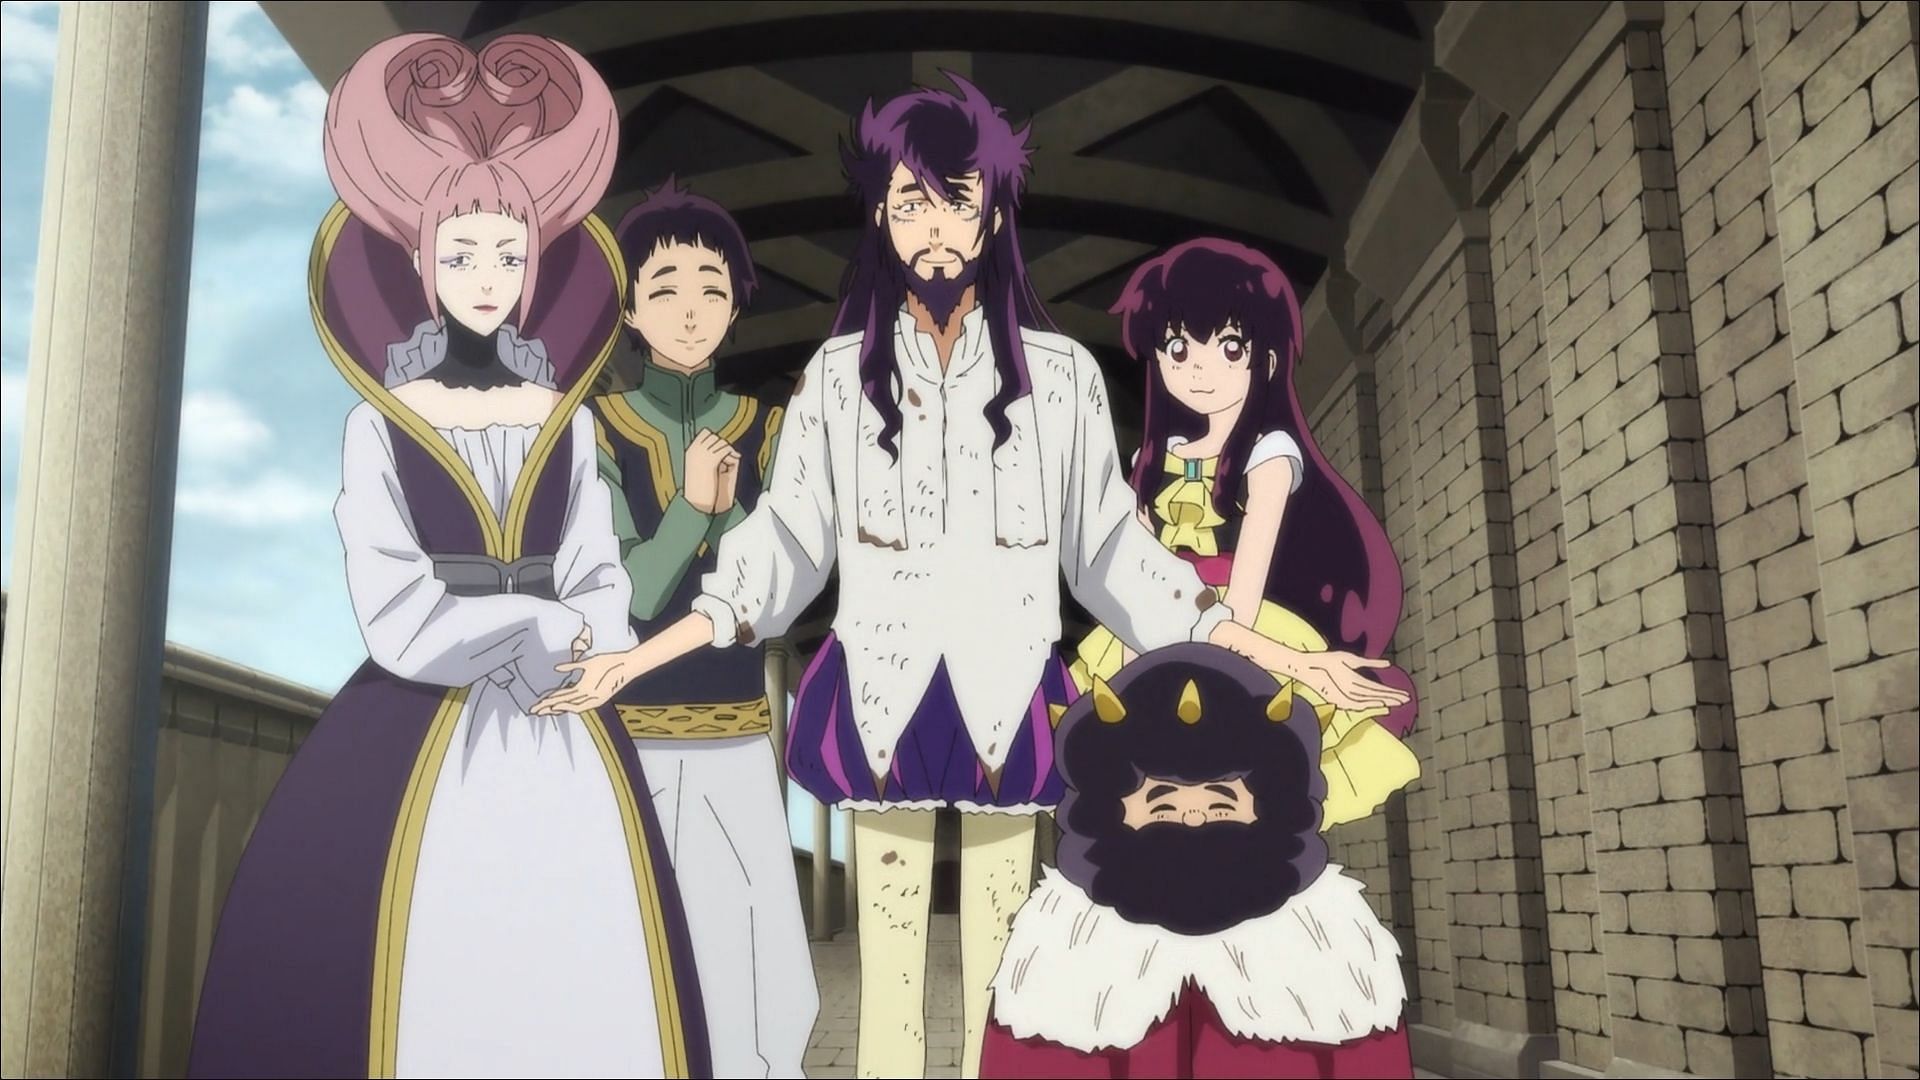 The Uralis Royal family as seen in the anime (Image via Studio Drive)